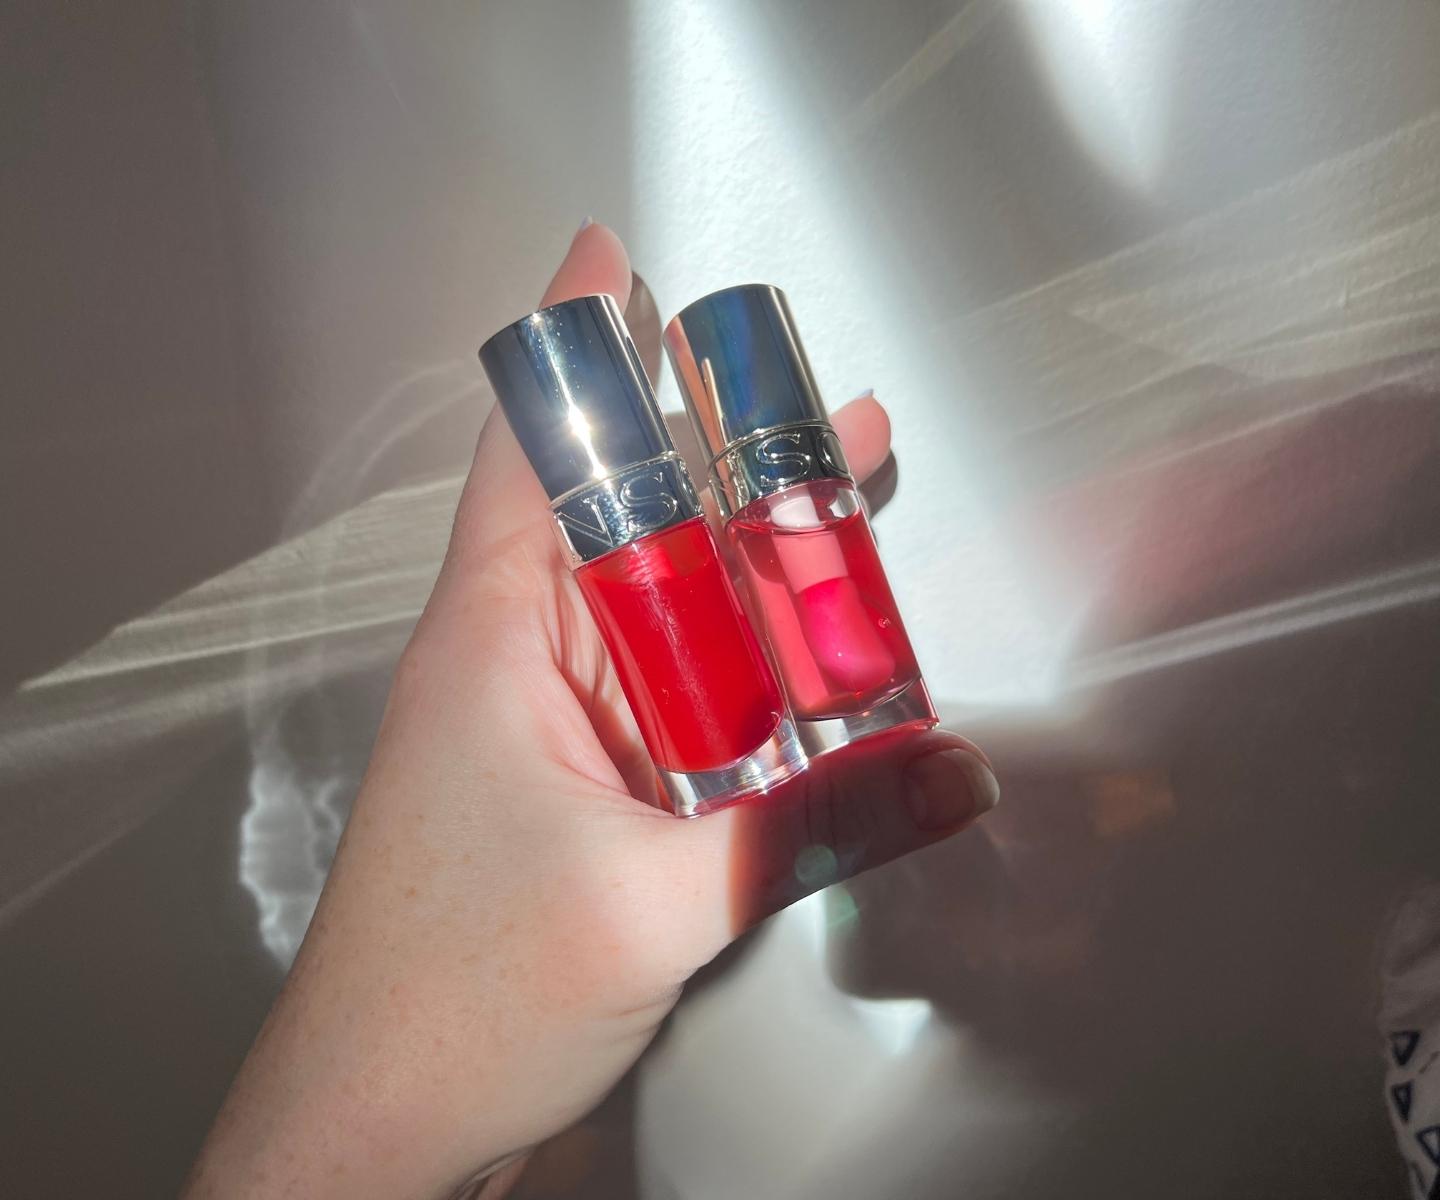 Lipsticks  CLARINS® UK